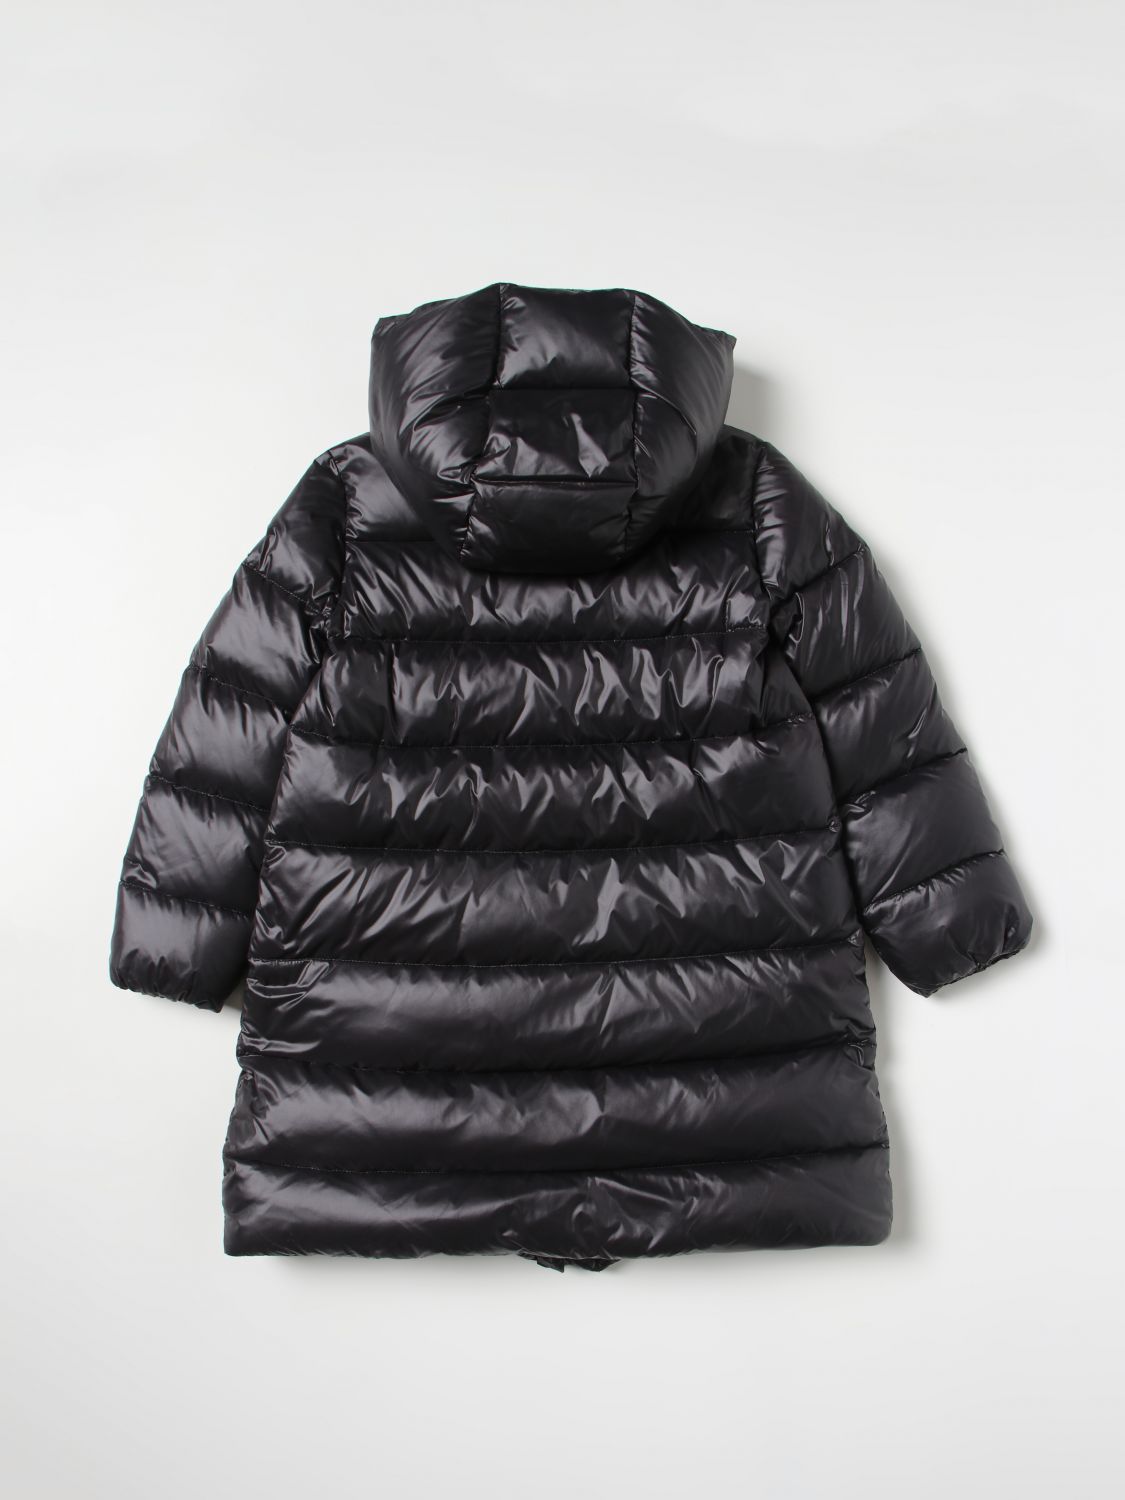 Clothing Boys Clothing Jackets & Coats Young Versace Kids Quilted Jacket Vintage High End Designer Black VTG 